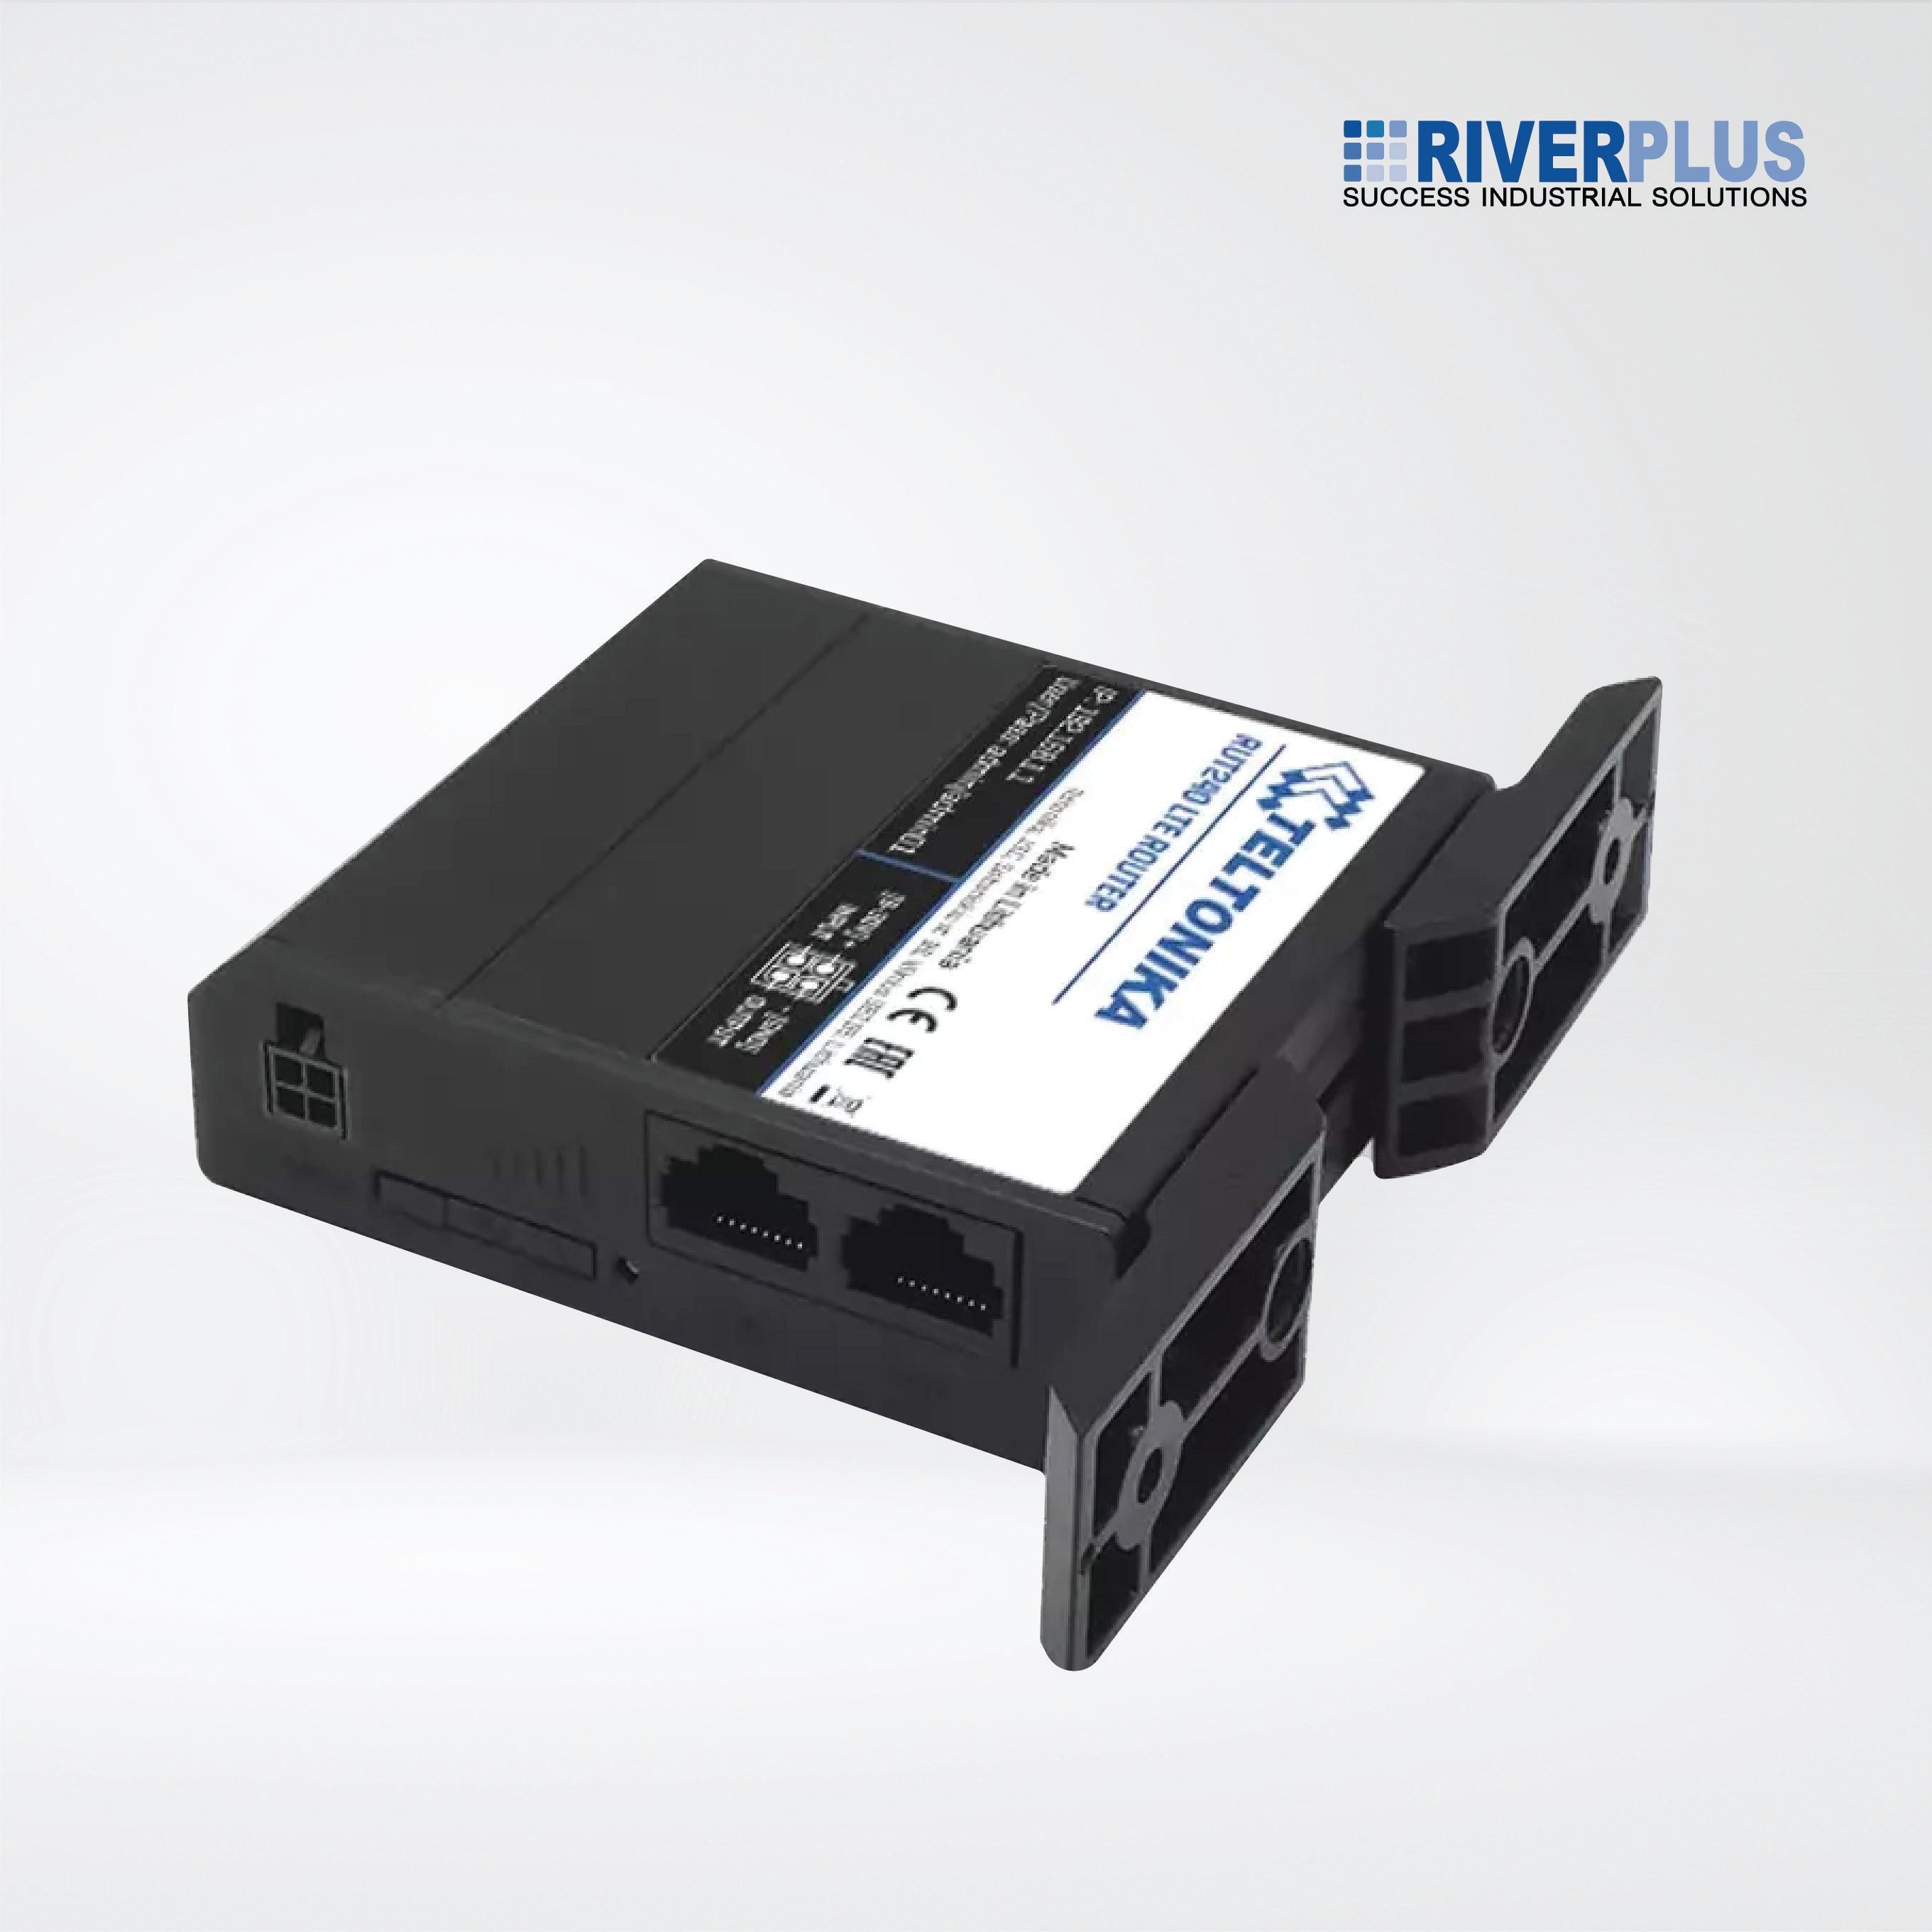 PR5MEC12 Surface mounting kit for Teltonika routers - Riverplus